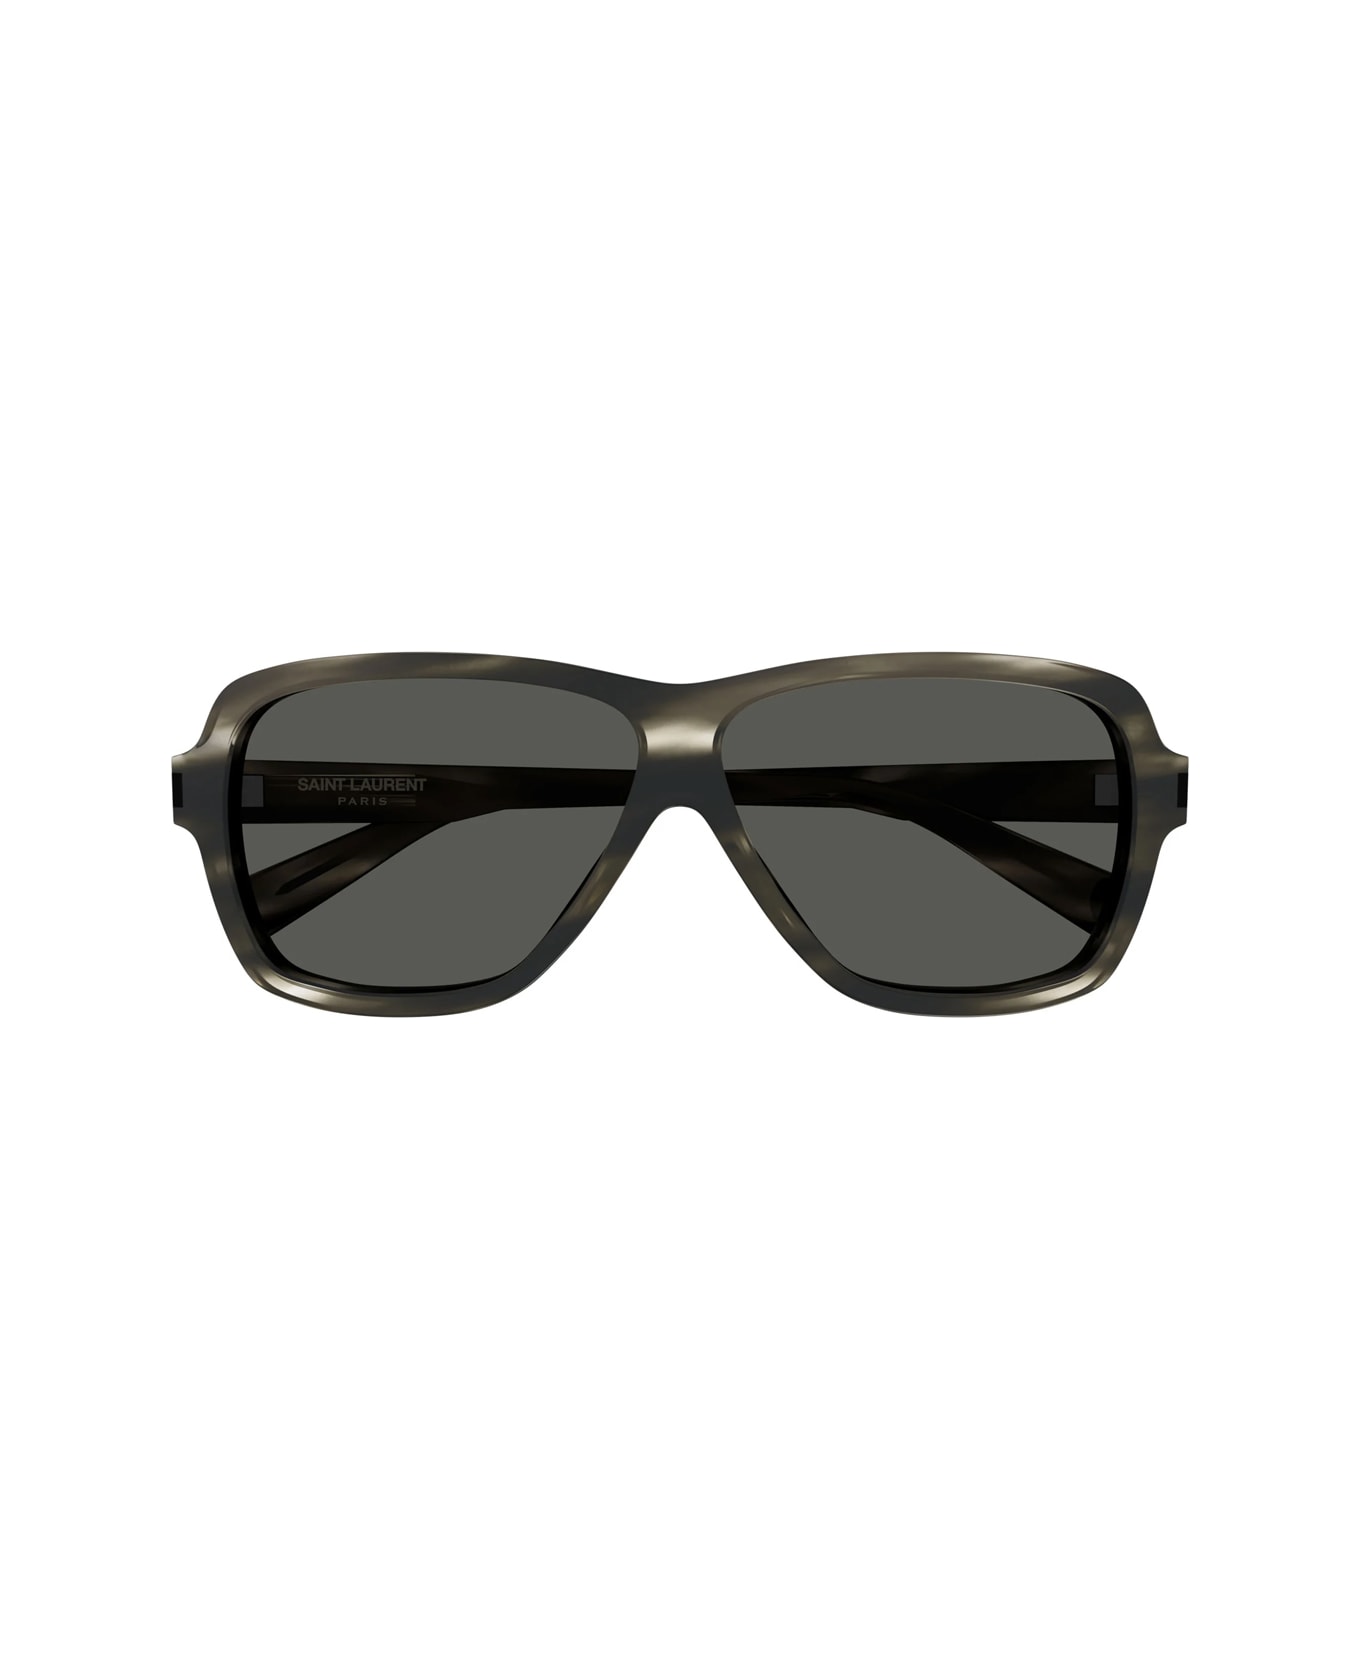 Saint Laurent Eyewear Sl 609 Carolyn 004 Sunglasses - Grigio